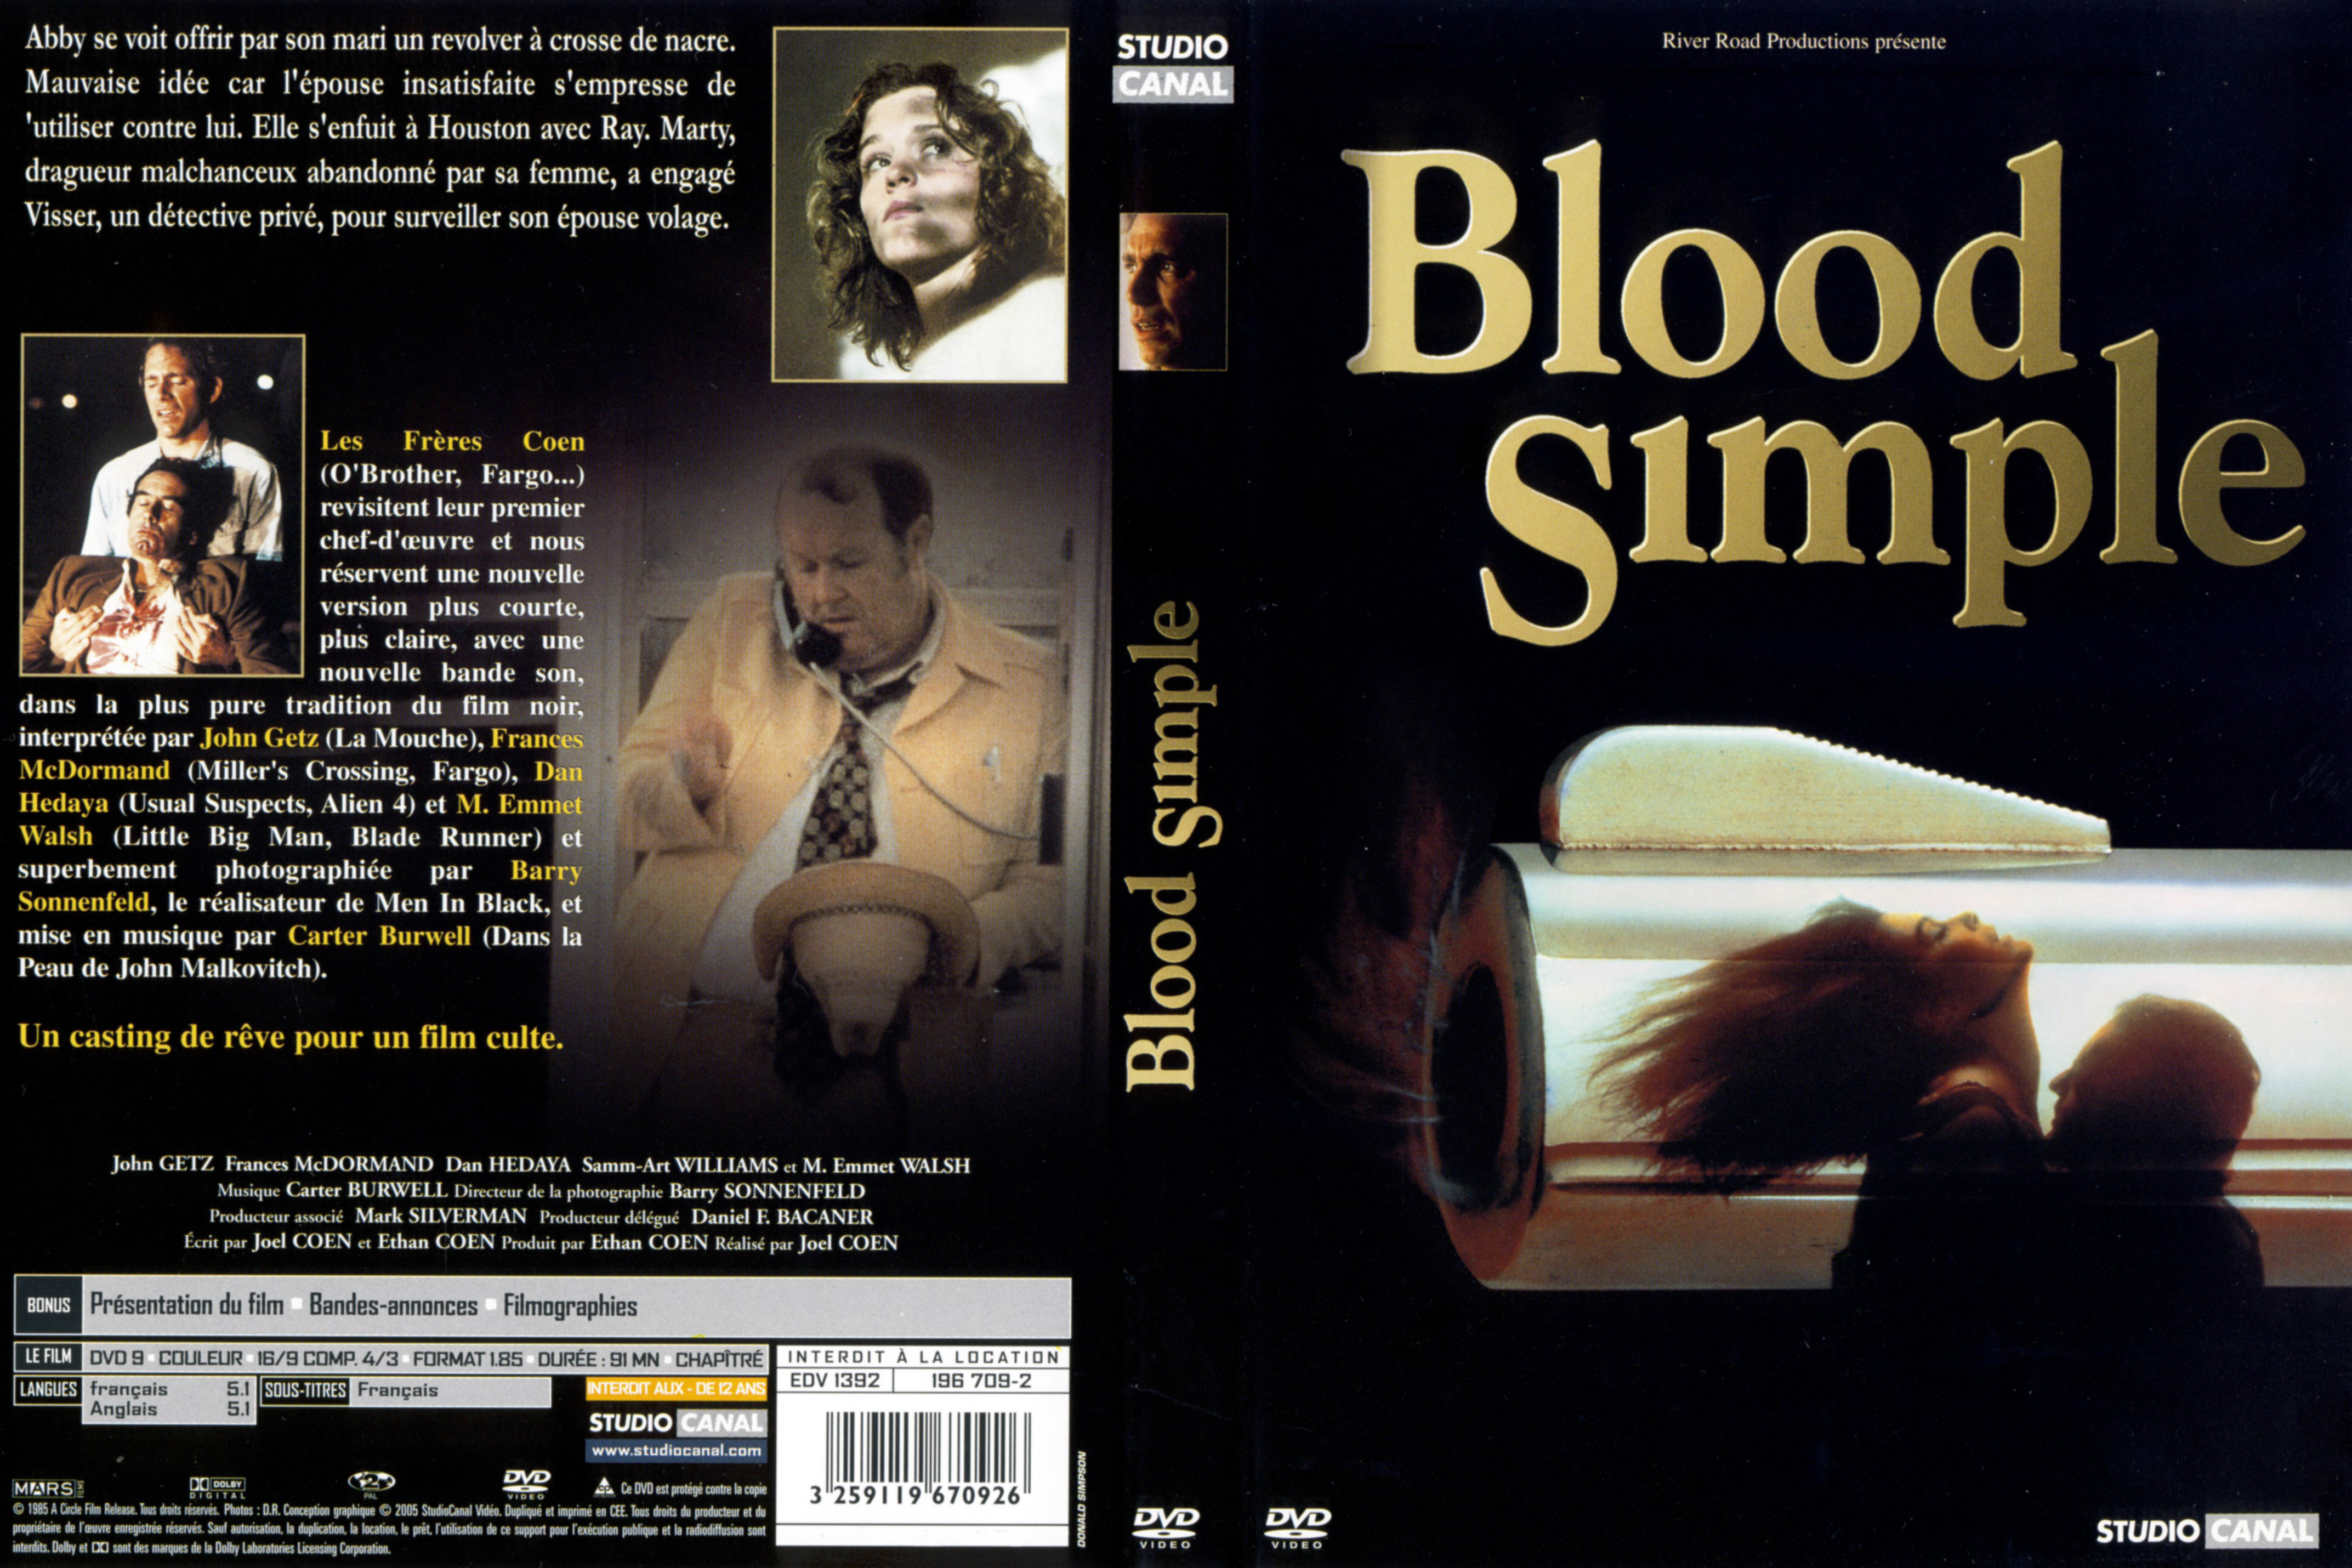 Jaquette DVD Blood simple